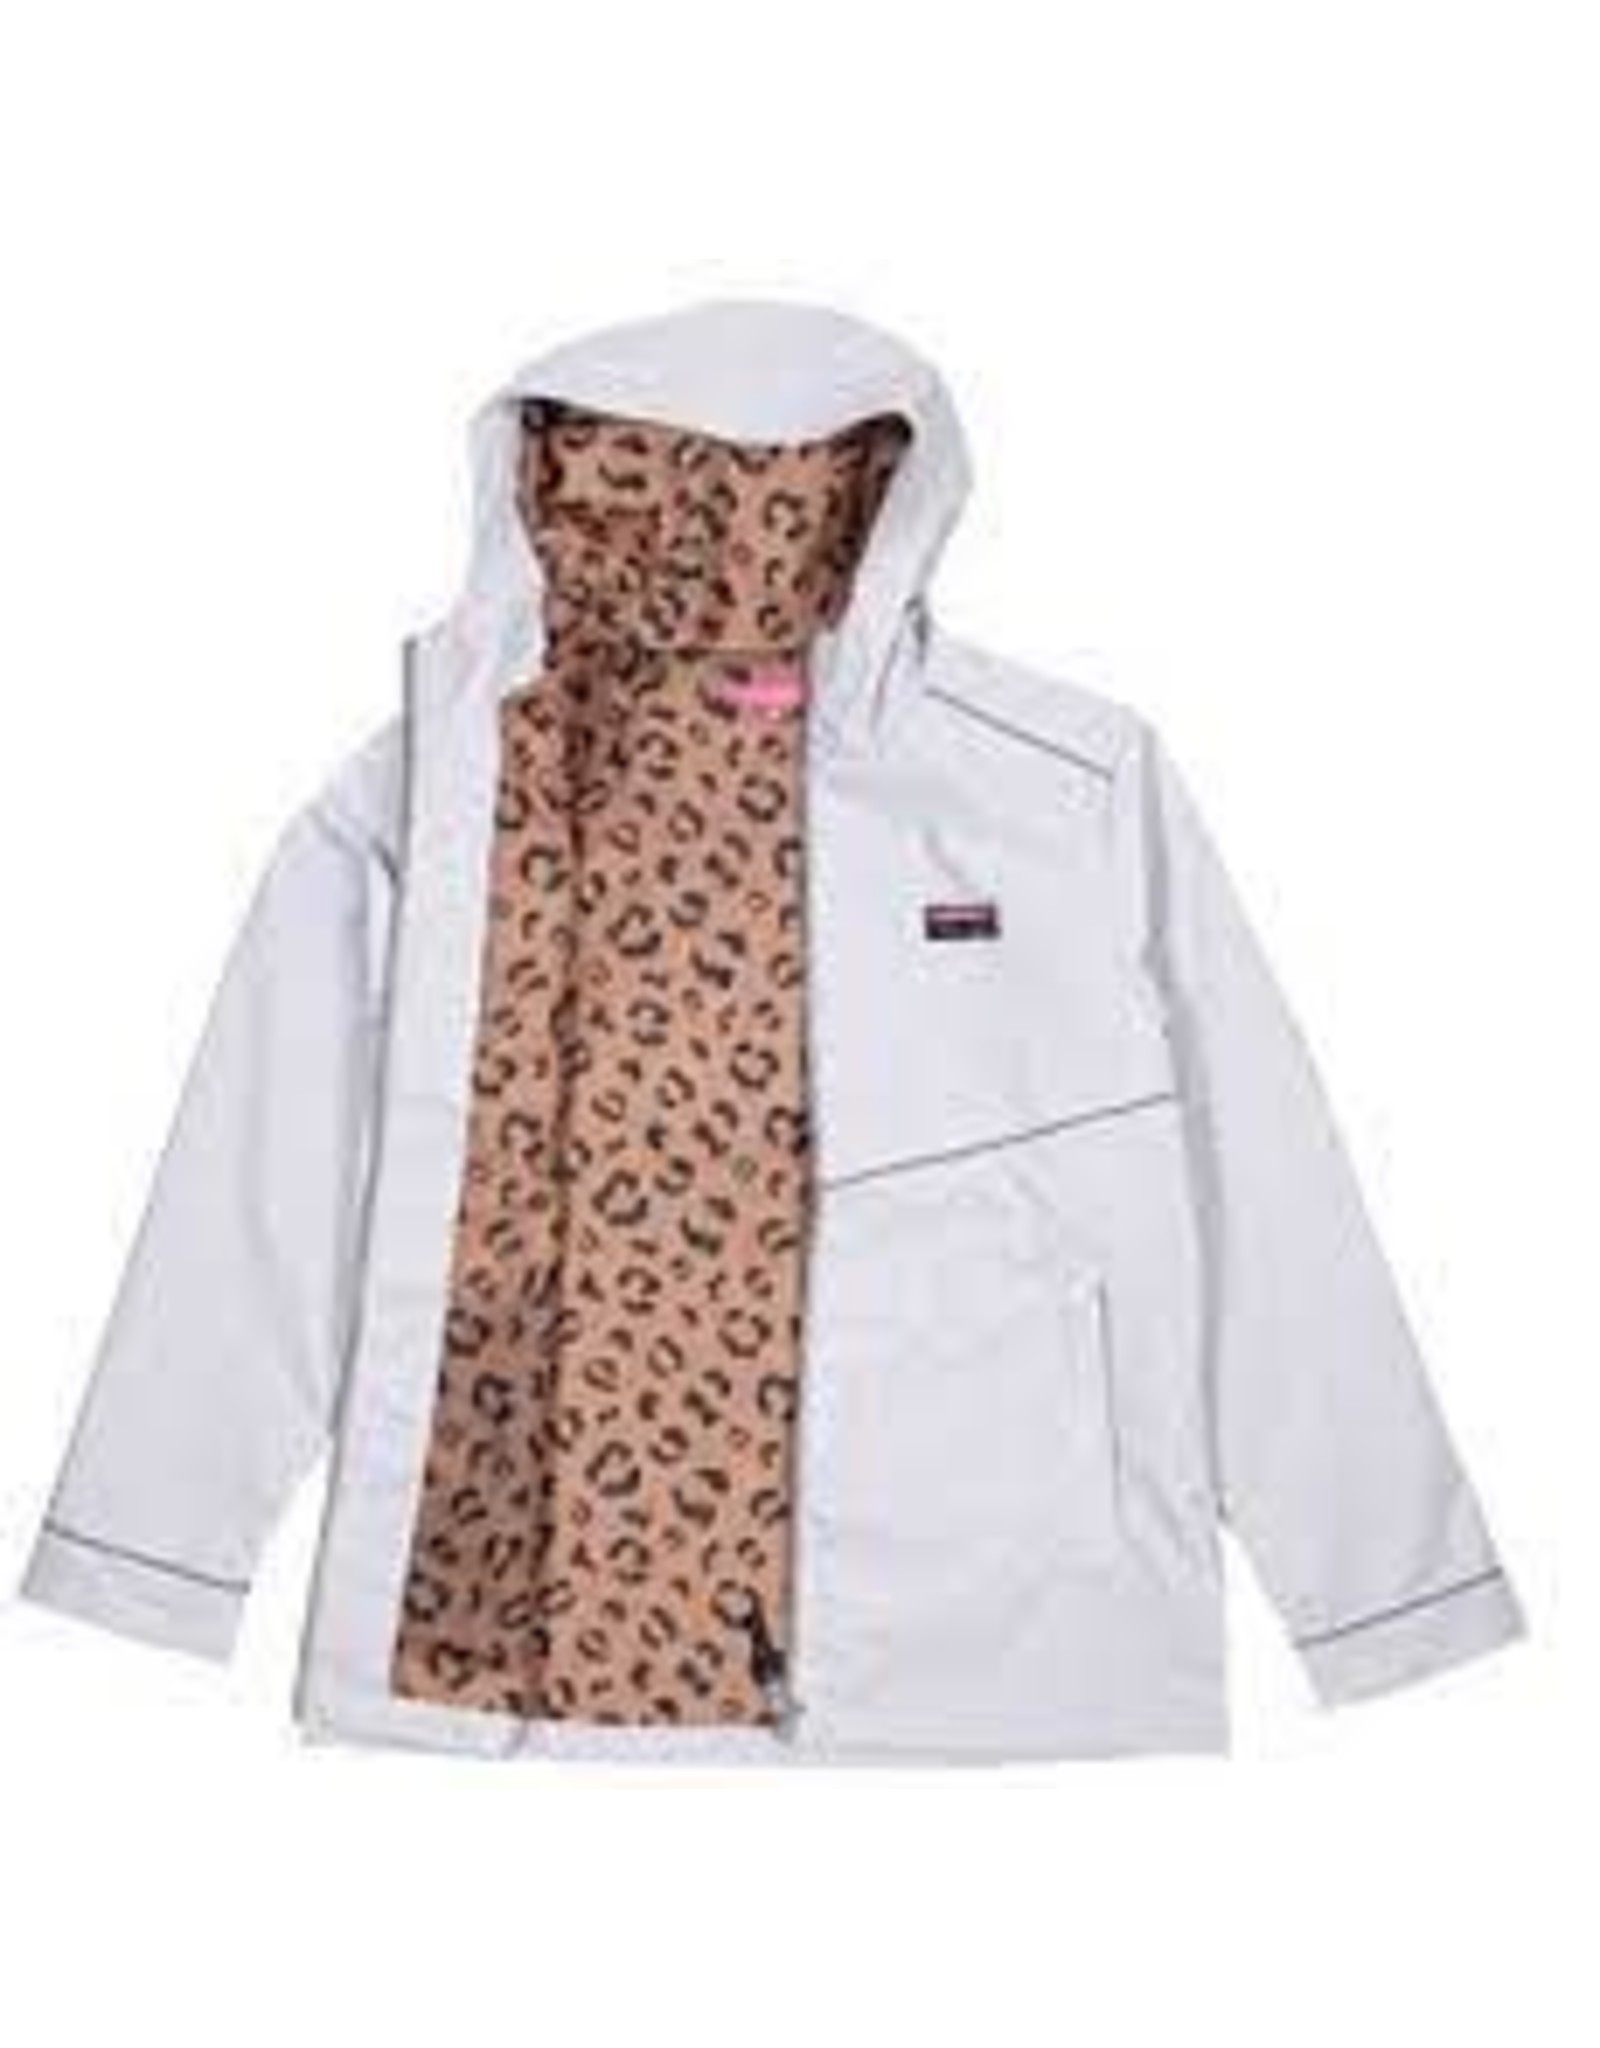 Grey Leopard Rain Jacket